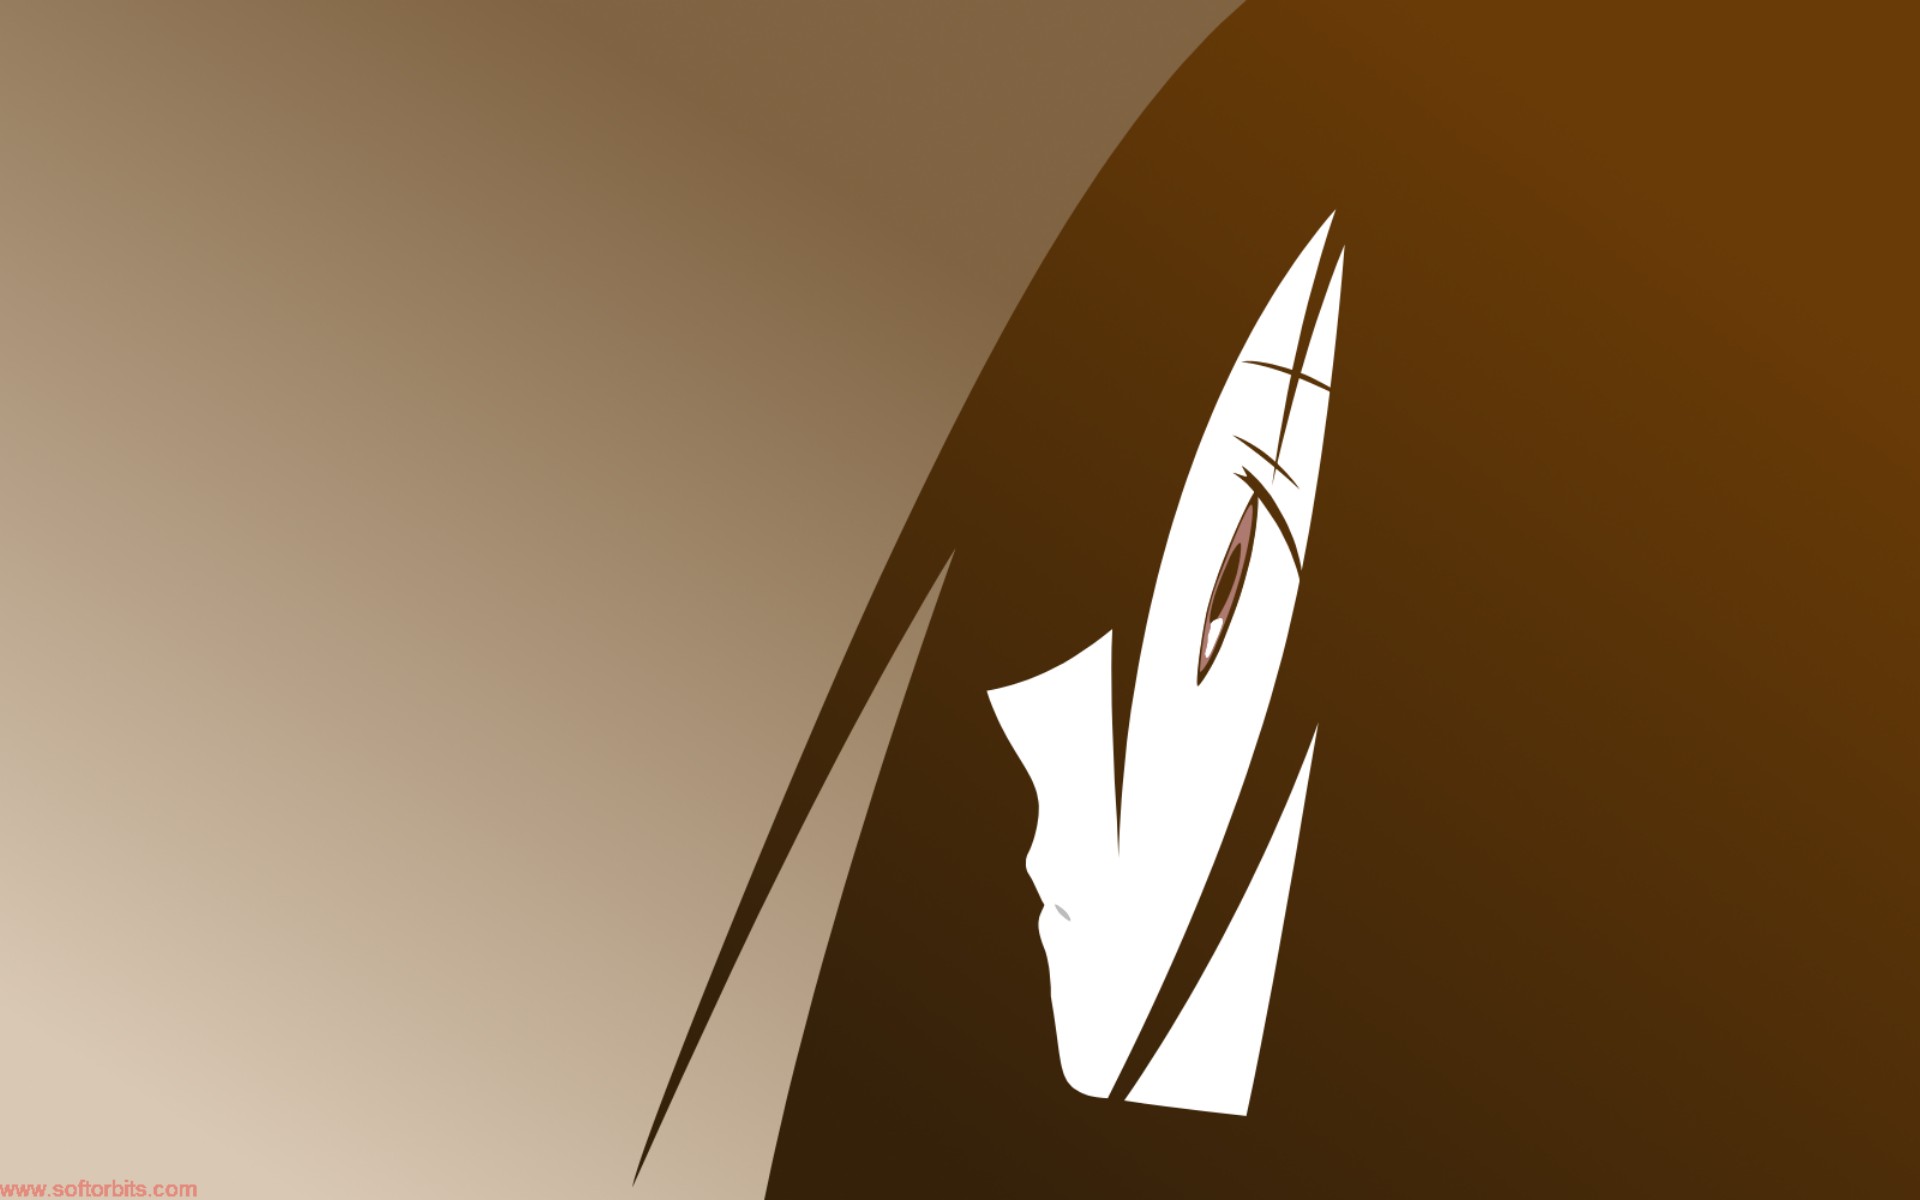 Depicts Kiri Komori from Sayonara Zetsubou-Sensei, an anime character against a vibrant background.